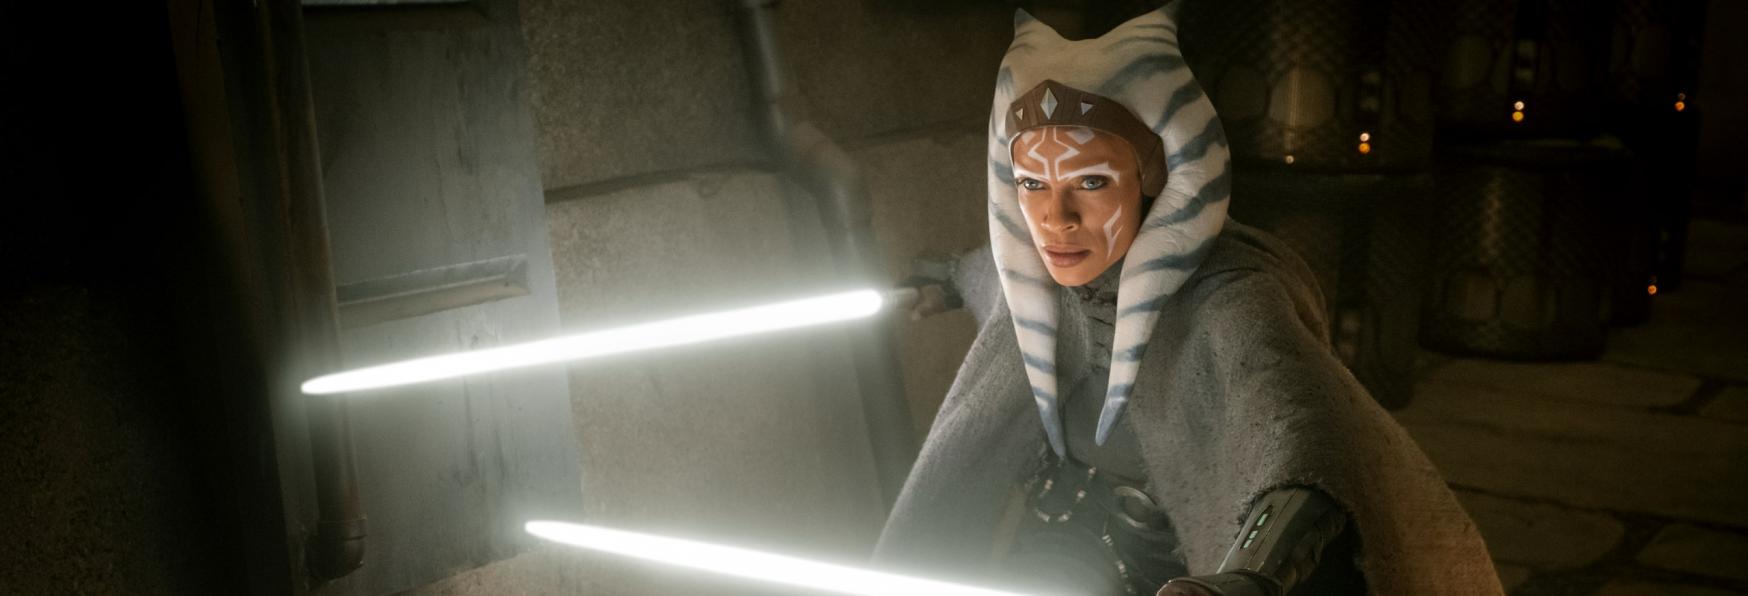 Star Wars: Disney annuncia Ahsoka Tano e Rangers of The New Republic come prossime Serie TV Live-Action